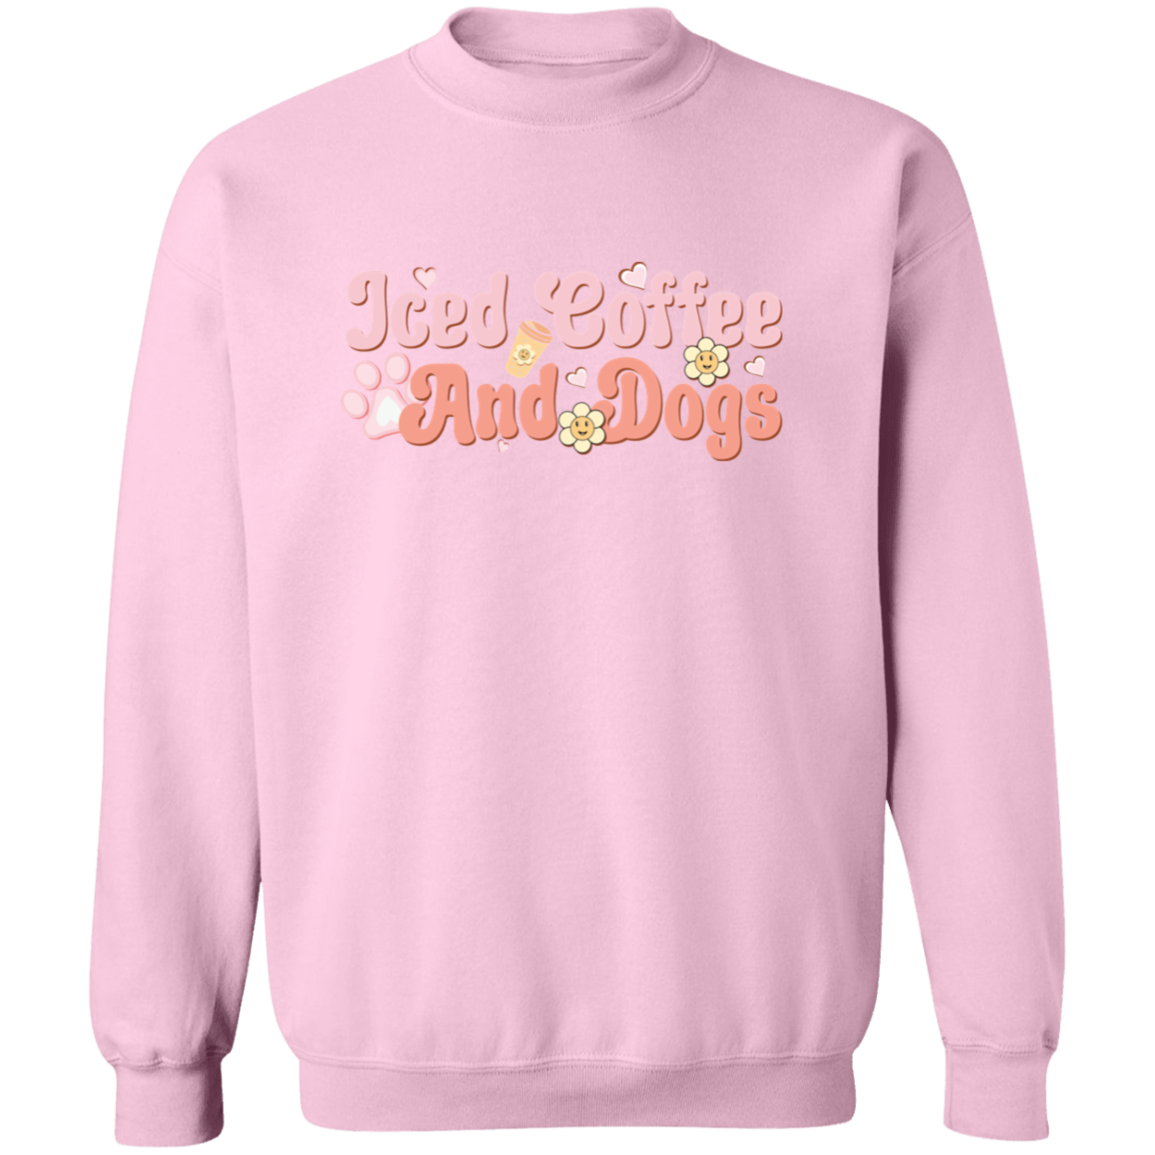 Iced Coffee and Dogs Retro Daisy Crewneck Pullover Sweatshirt